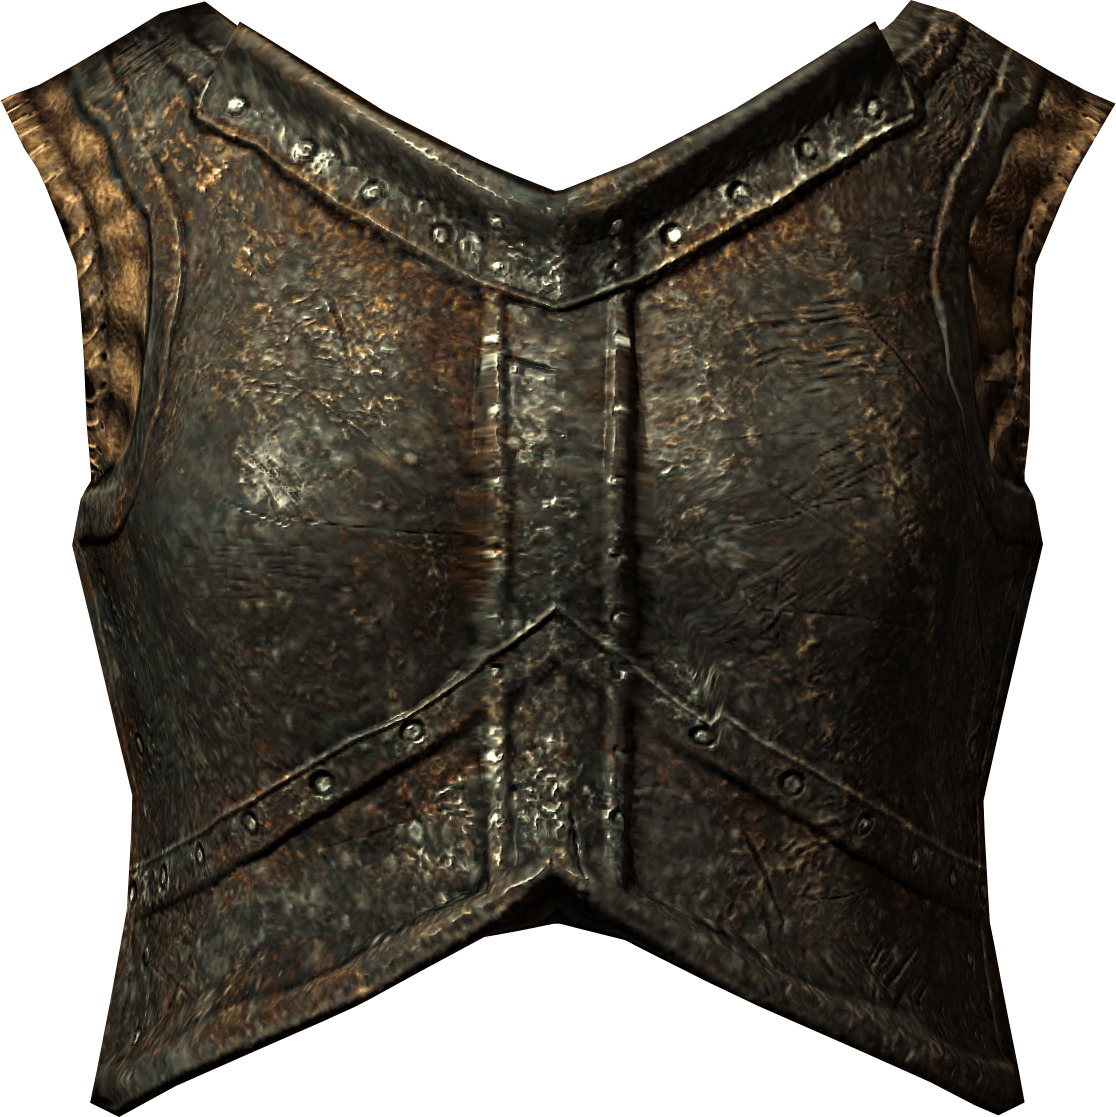 Elder Scrolls Skyrim Armor png icons